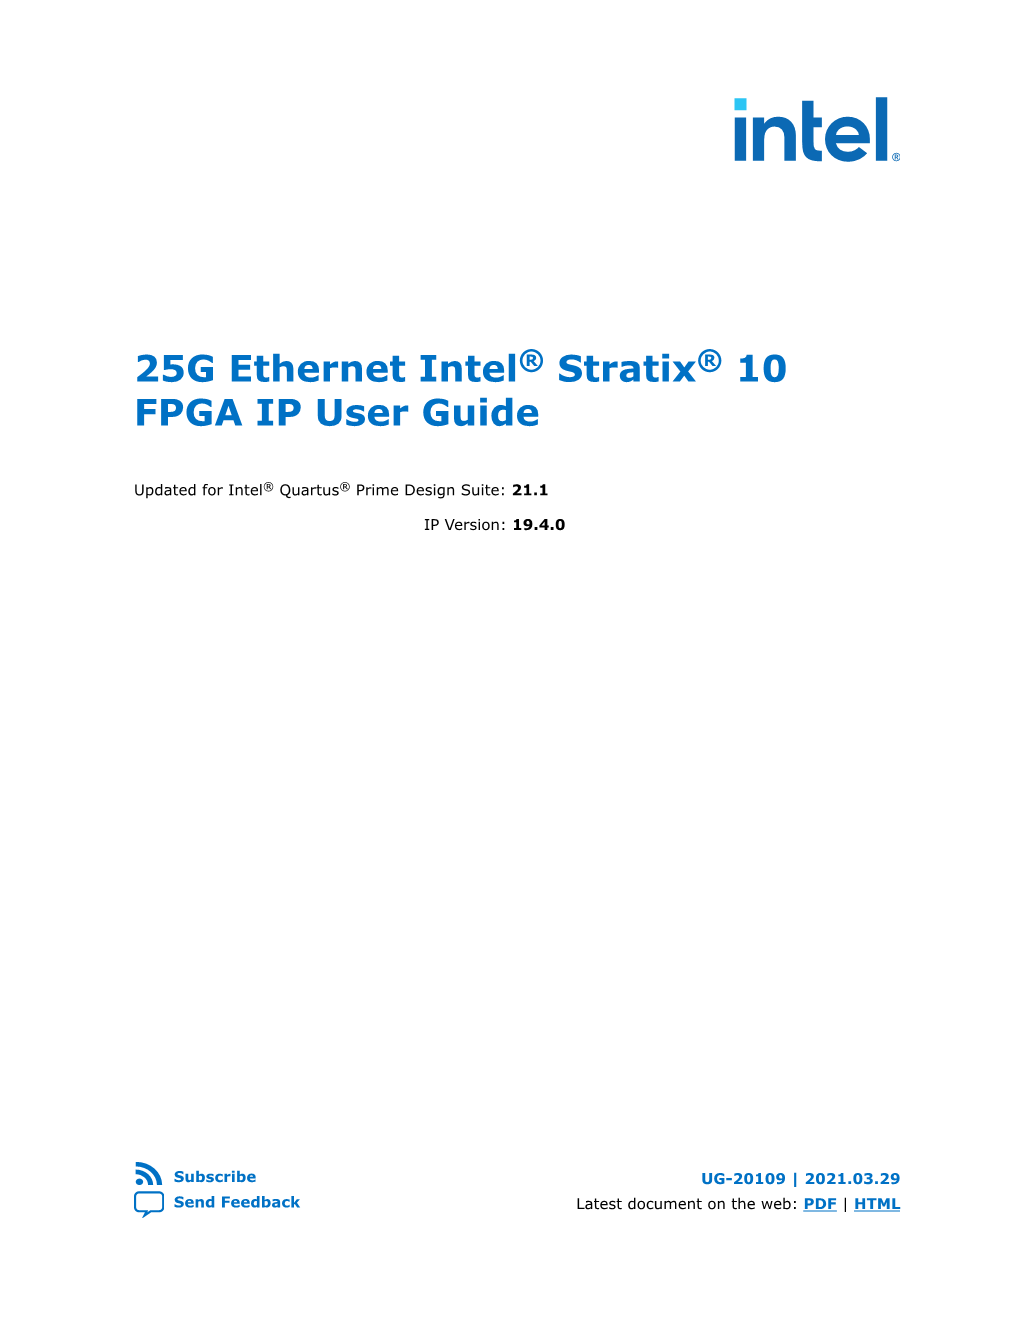 25G Ethernet Intel® Stratix® 10 FPGA IP User Guide